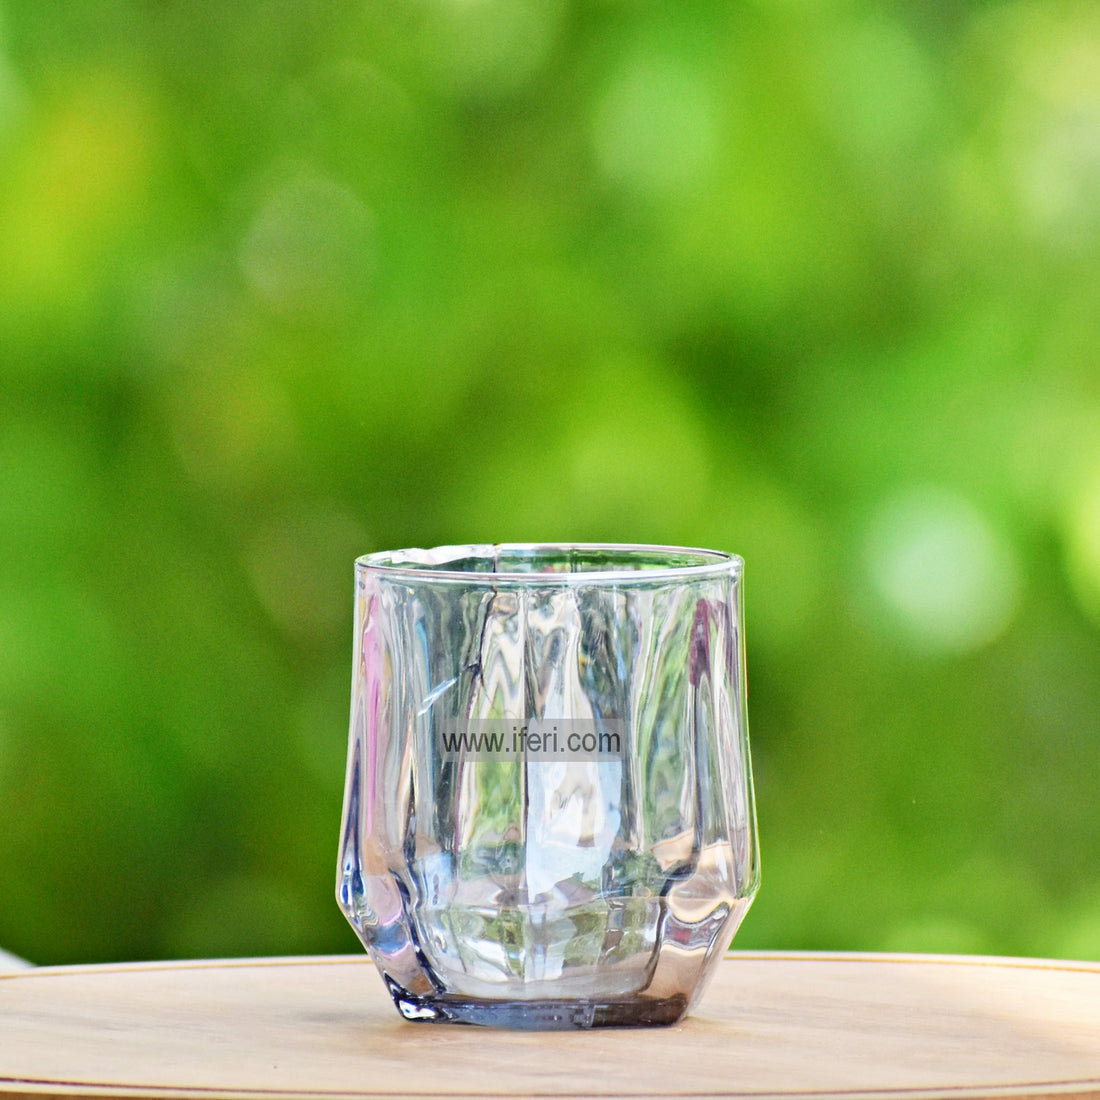 Buy Water Juice Glass Set Online from iferi.com in Bangladesh 